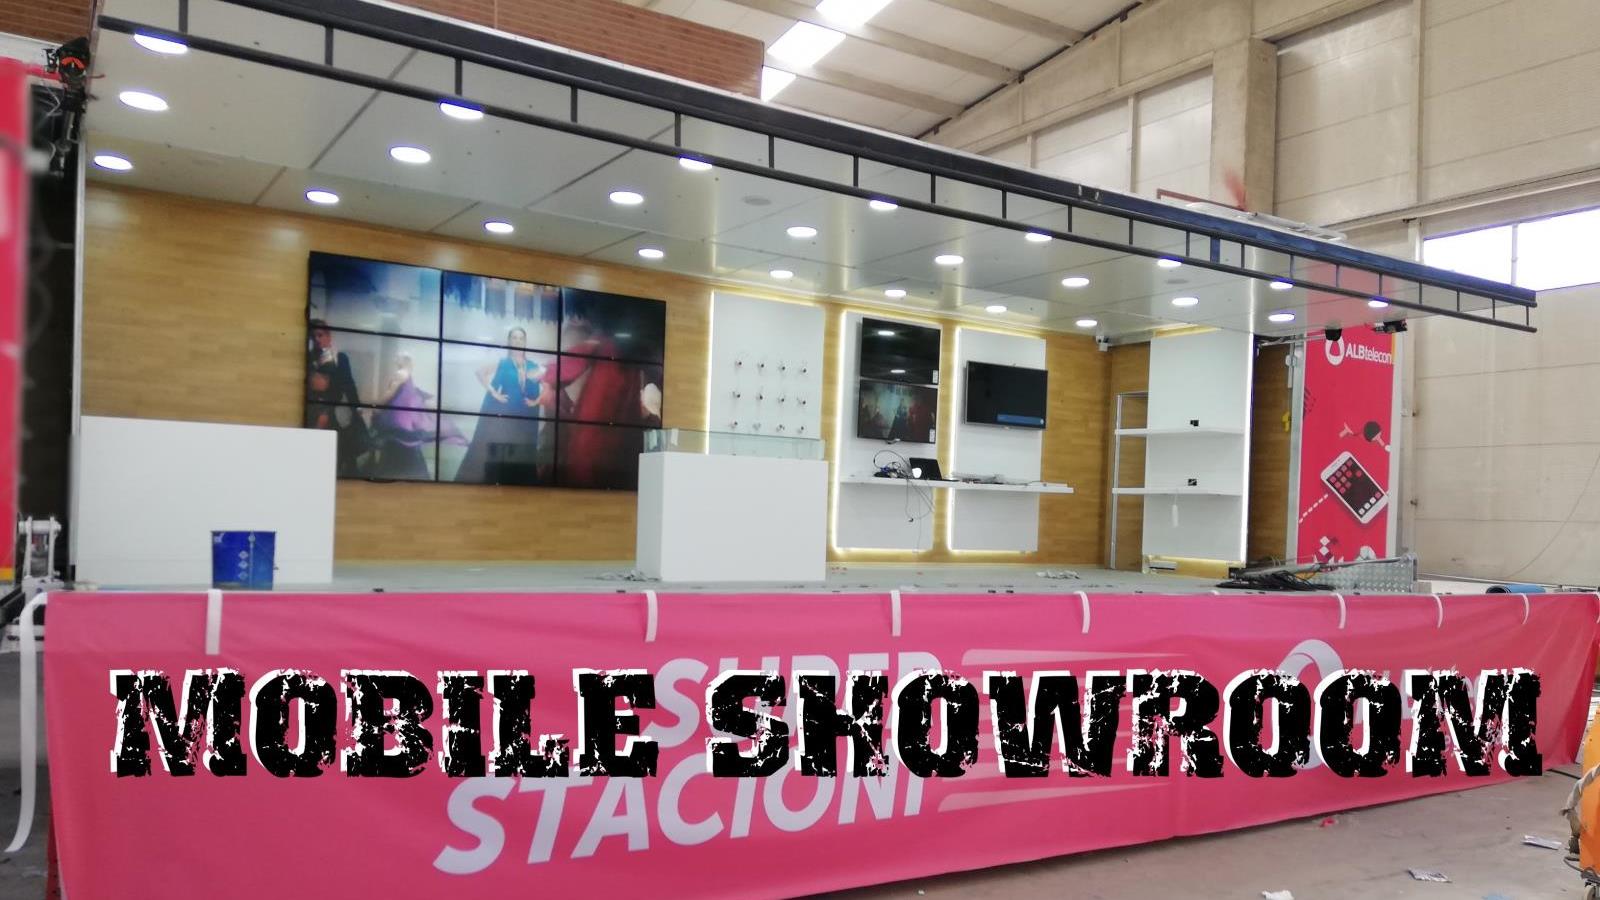 Mobile showroom exhibit trailers